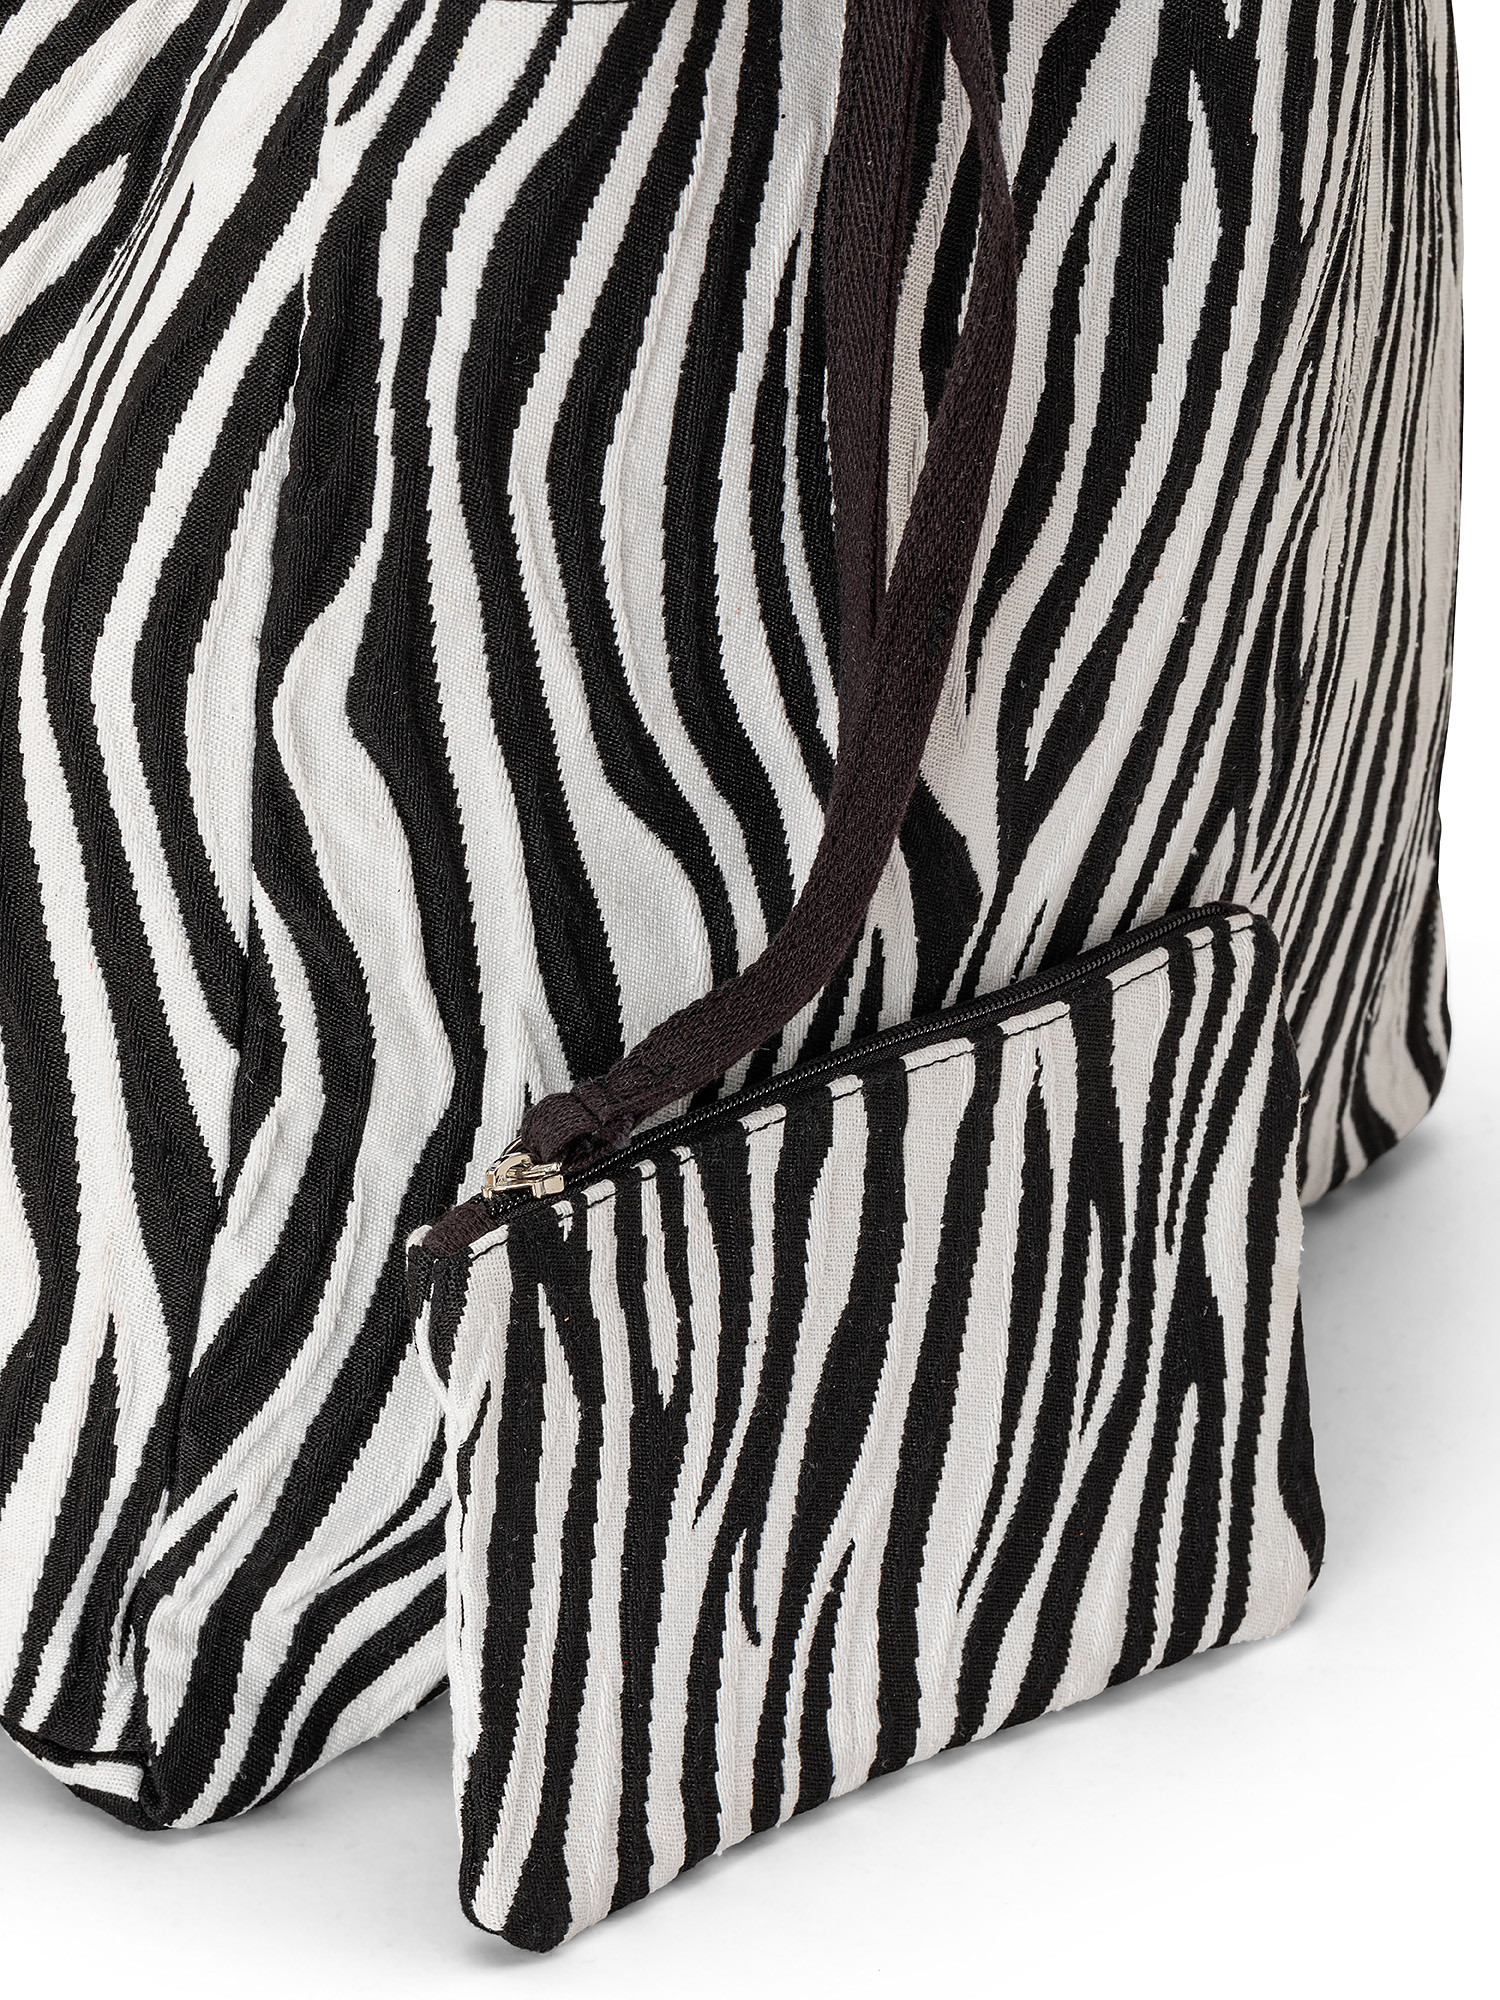 Shopping bag with zebra print, Animal, large image number 2